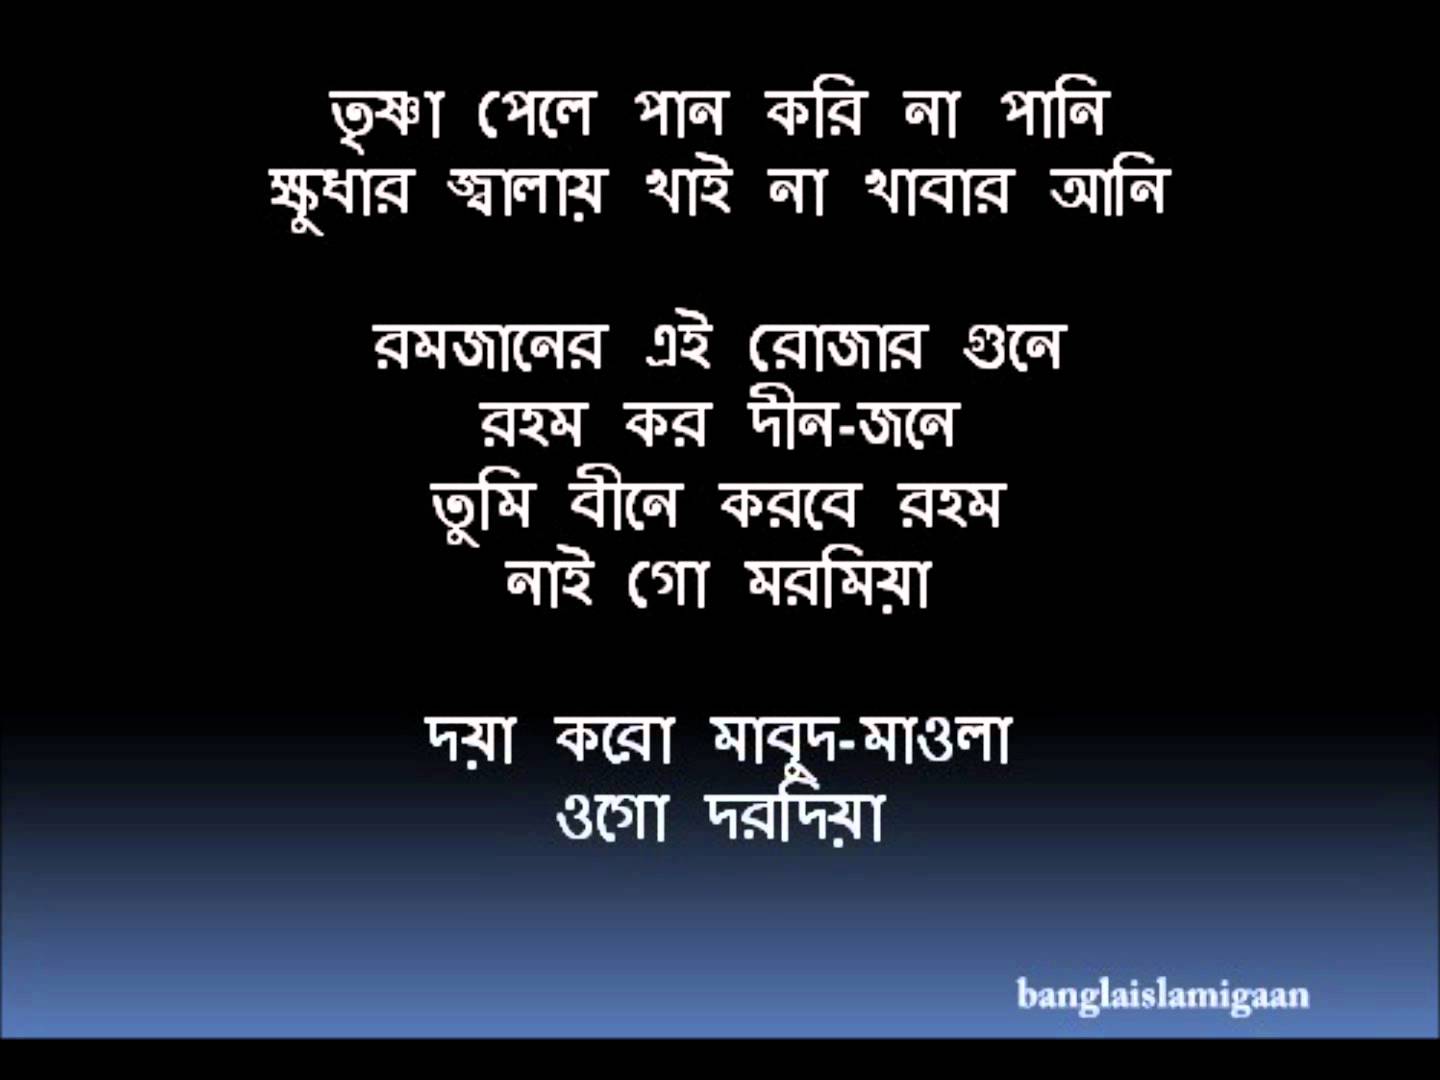 papel tapiz islámico bangla,texto,fuente,fotografía,captura de pantalla